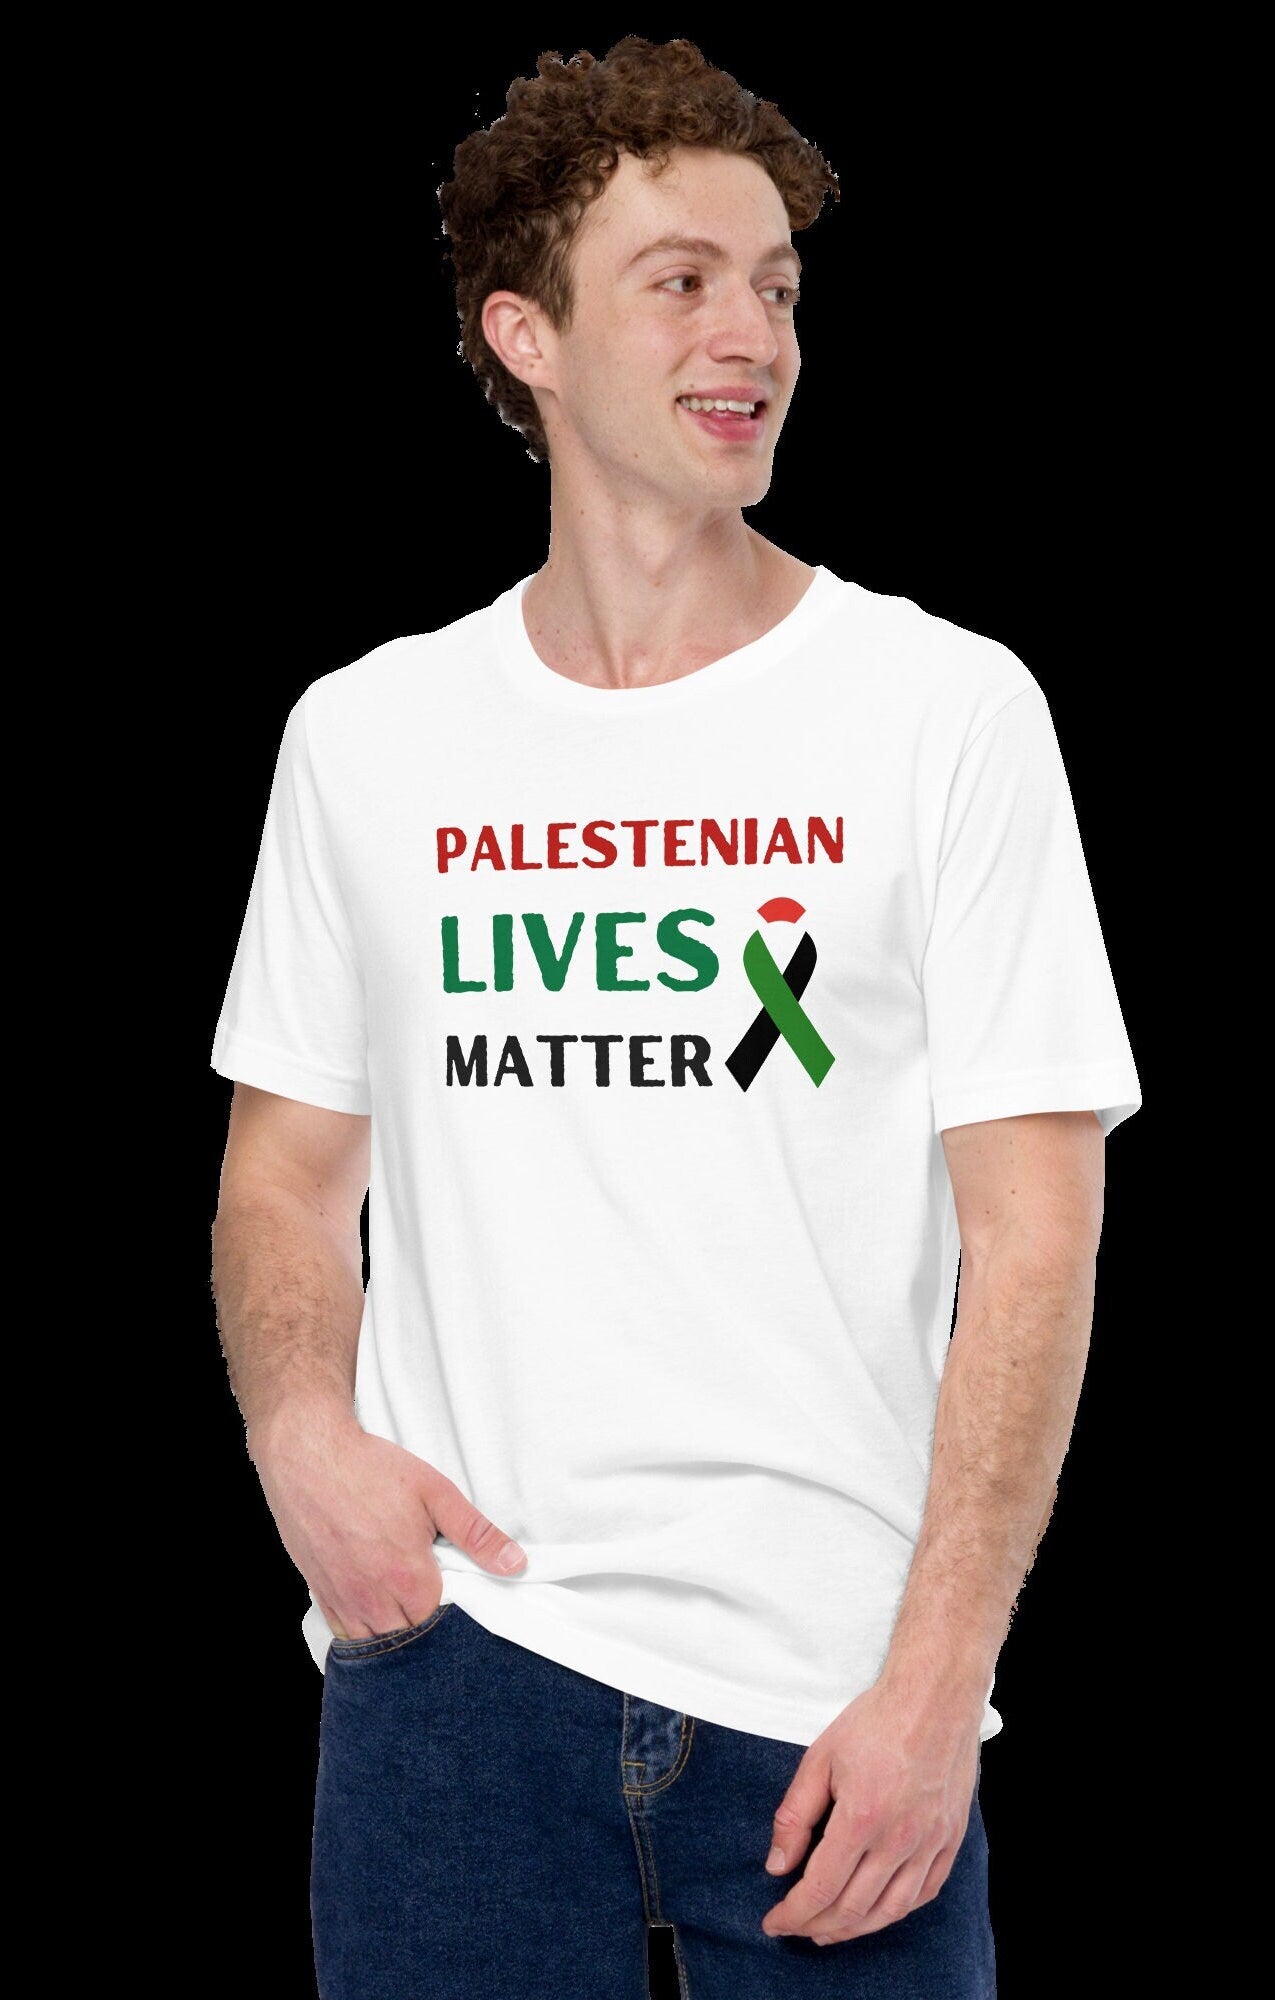 Free Palestine Shirt, Matching Palestinian Lives Matter t-shirt, Stand with Gaza Shirt, Protest Group Shirt